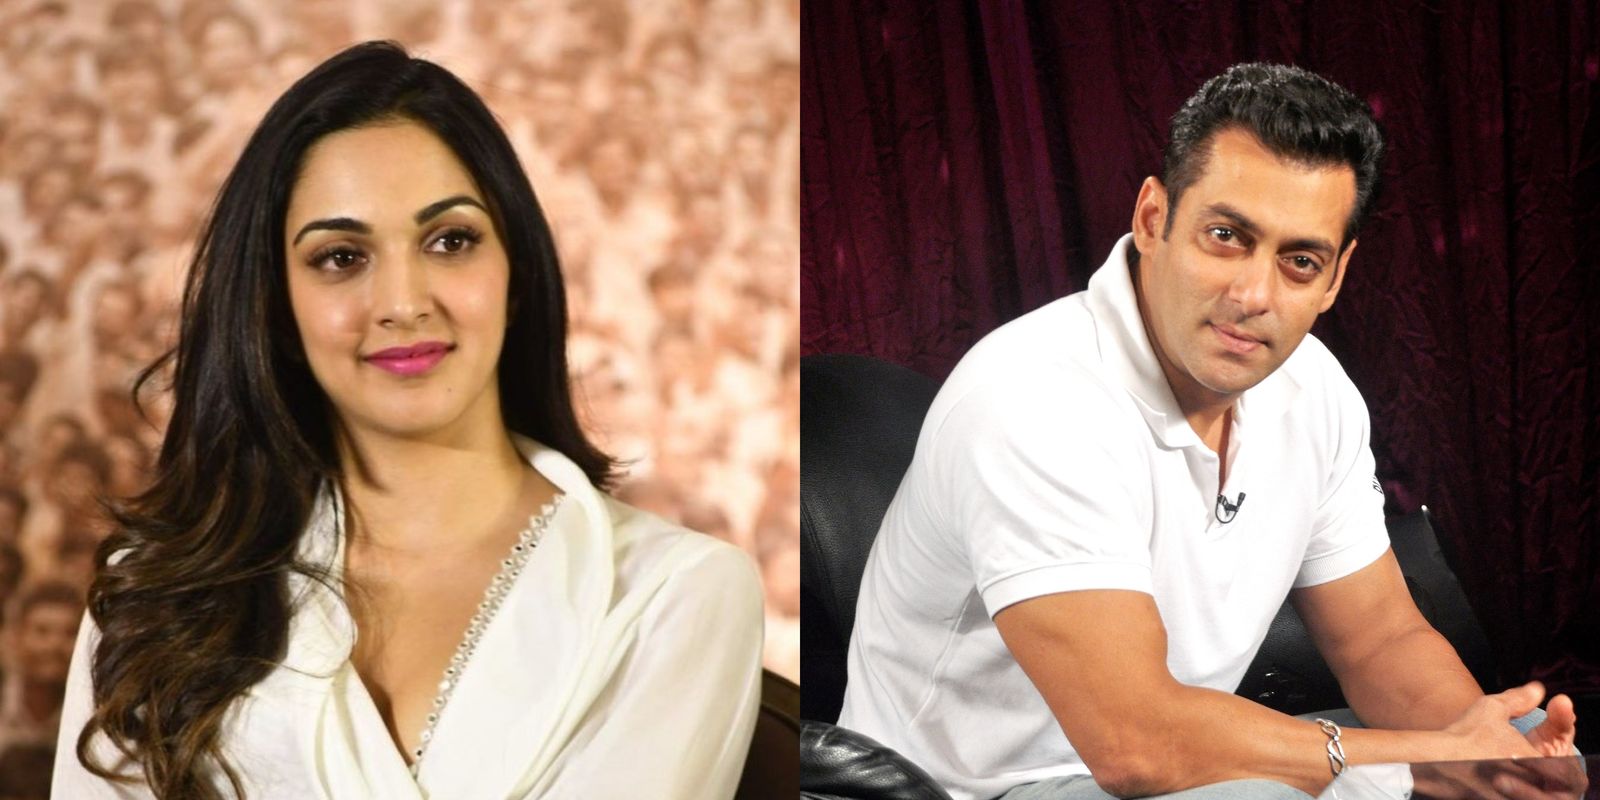 Kiara Advani On Her Fan Girl Moment With Salman Khan: ‘I Just Stood There, Gawking’